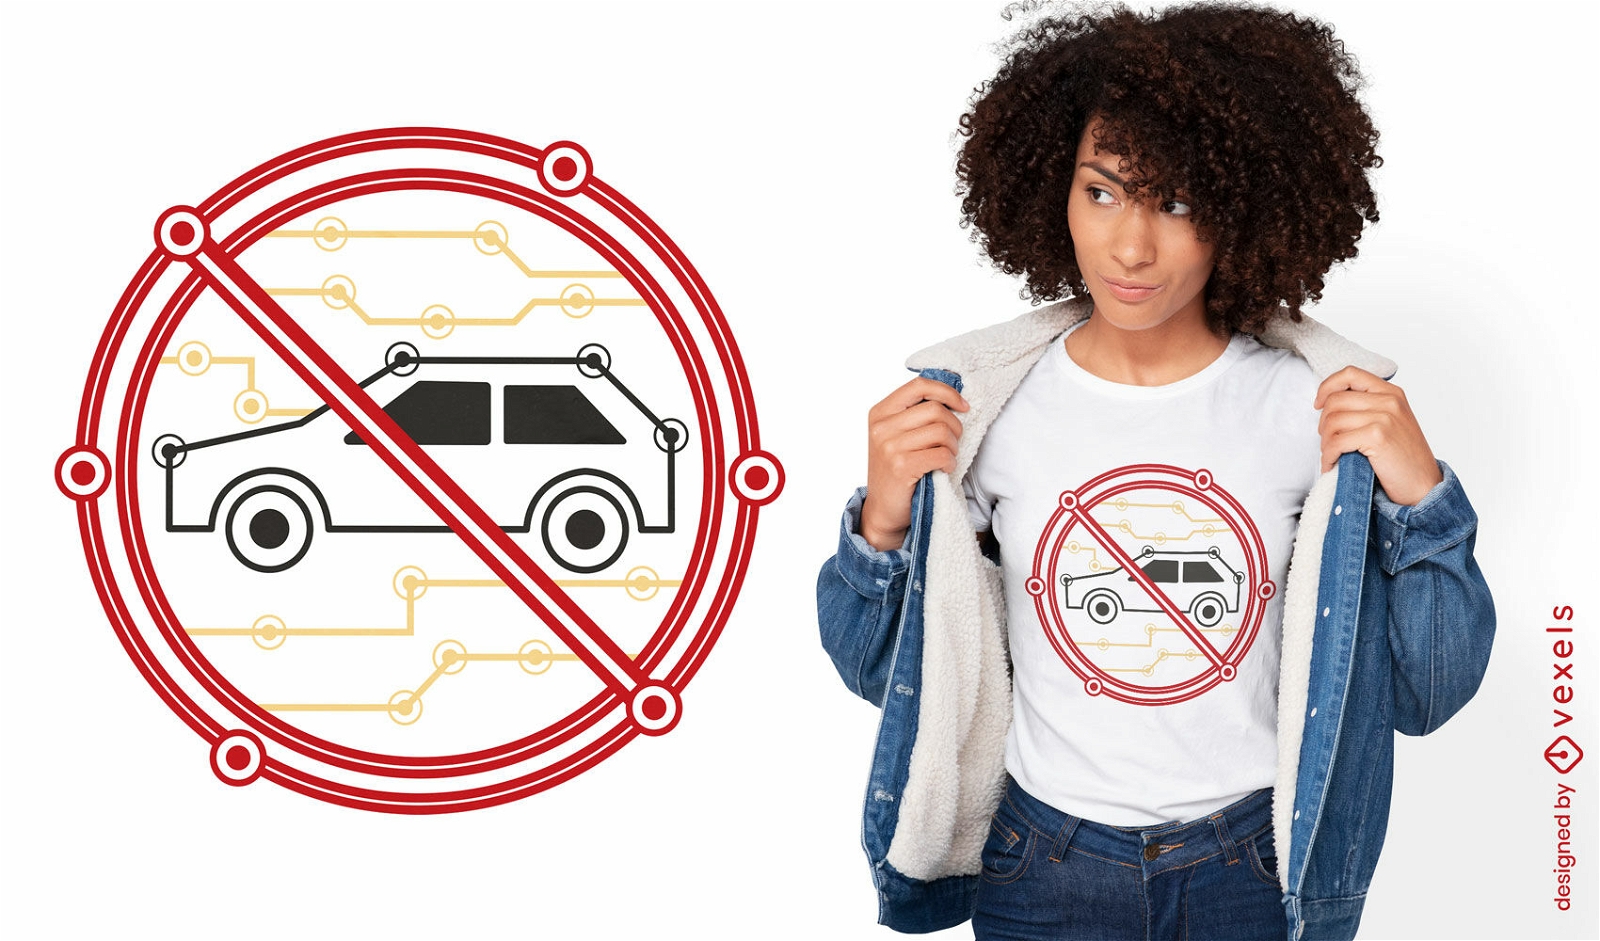 Prohibited car transport sign t-shirt design